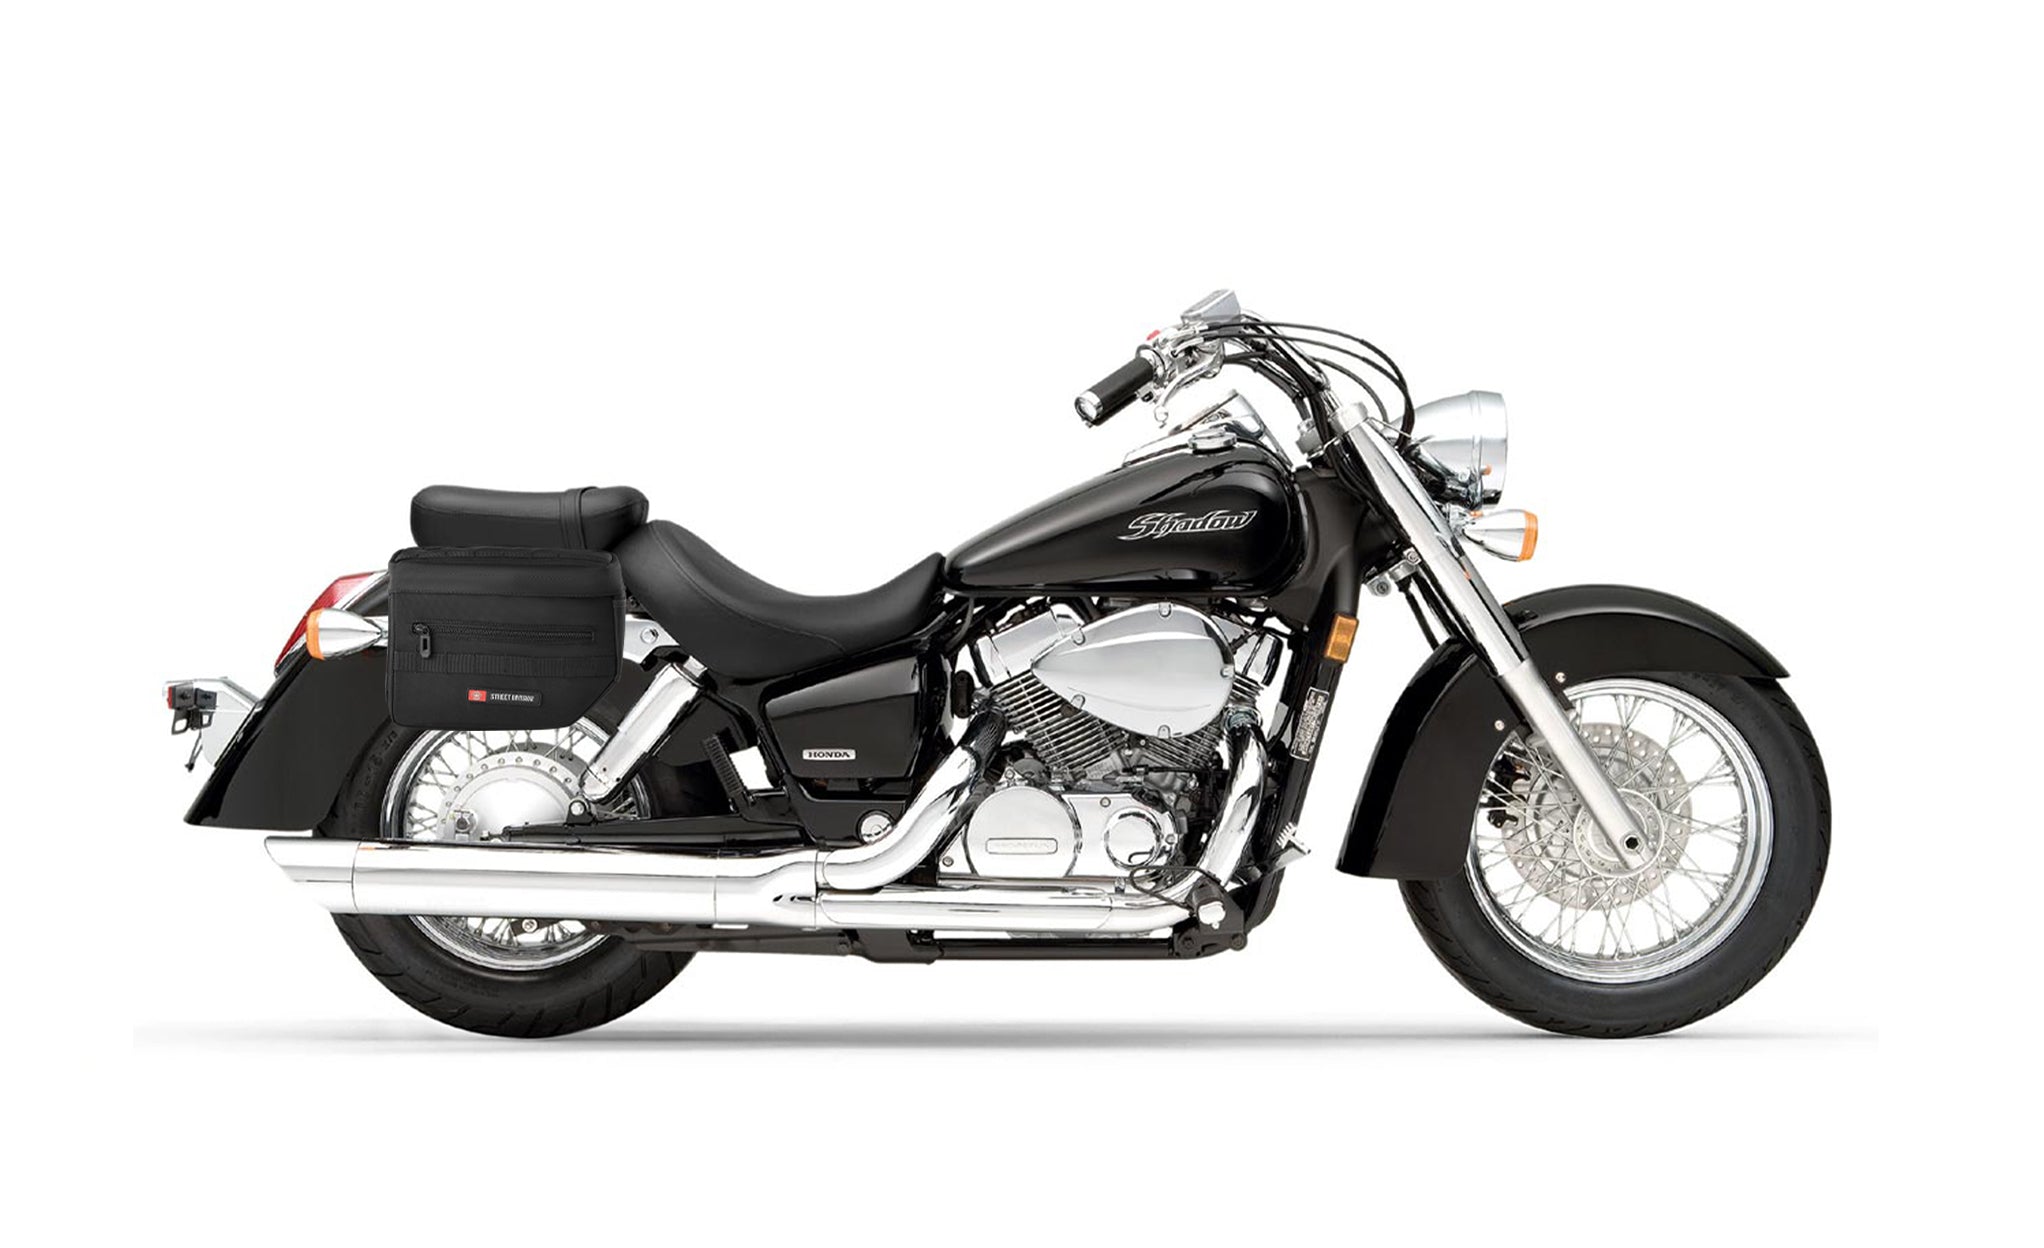 Viking Patriot Small Honda Shadow 750 Aero Motorcycle Throw Over Saddlebags on Bike Photo @expand